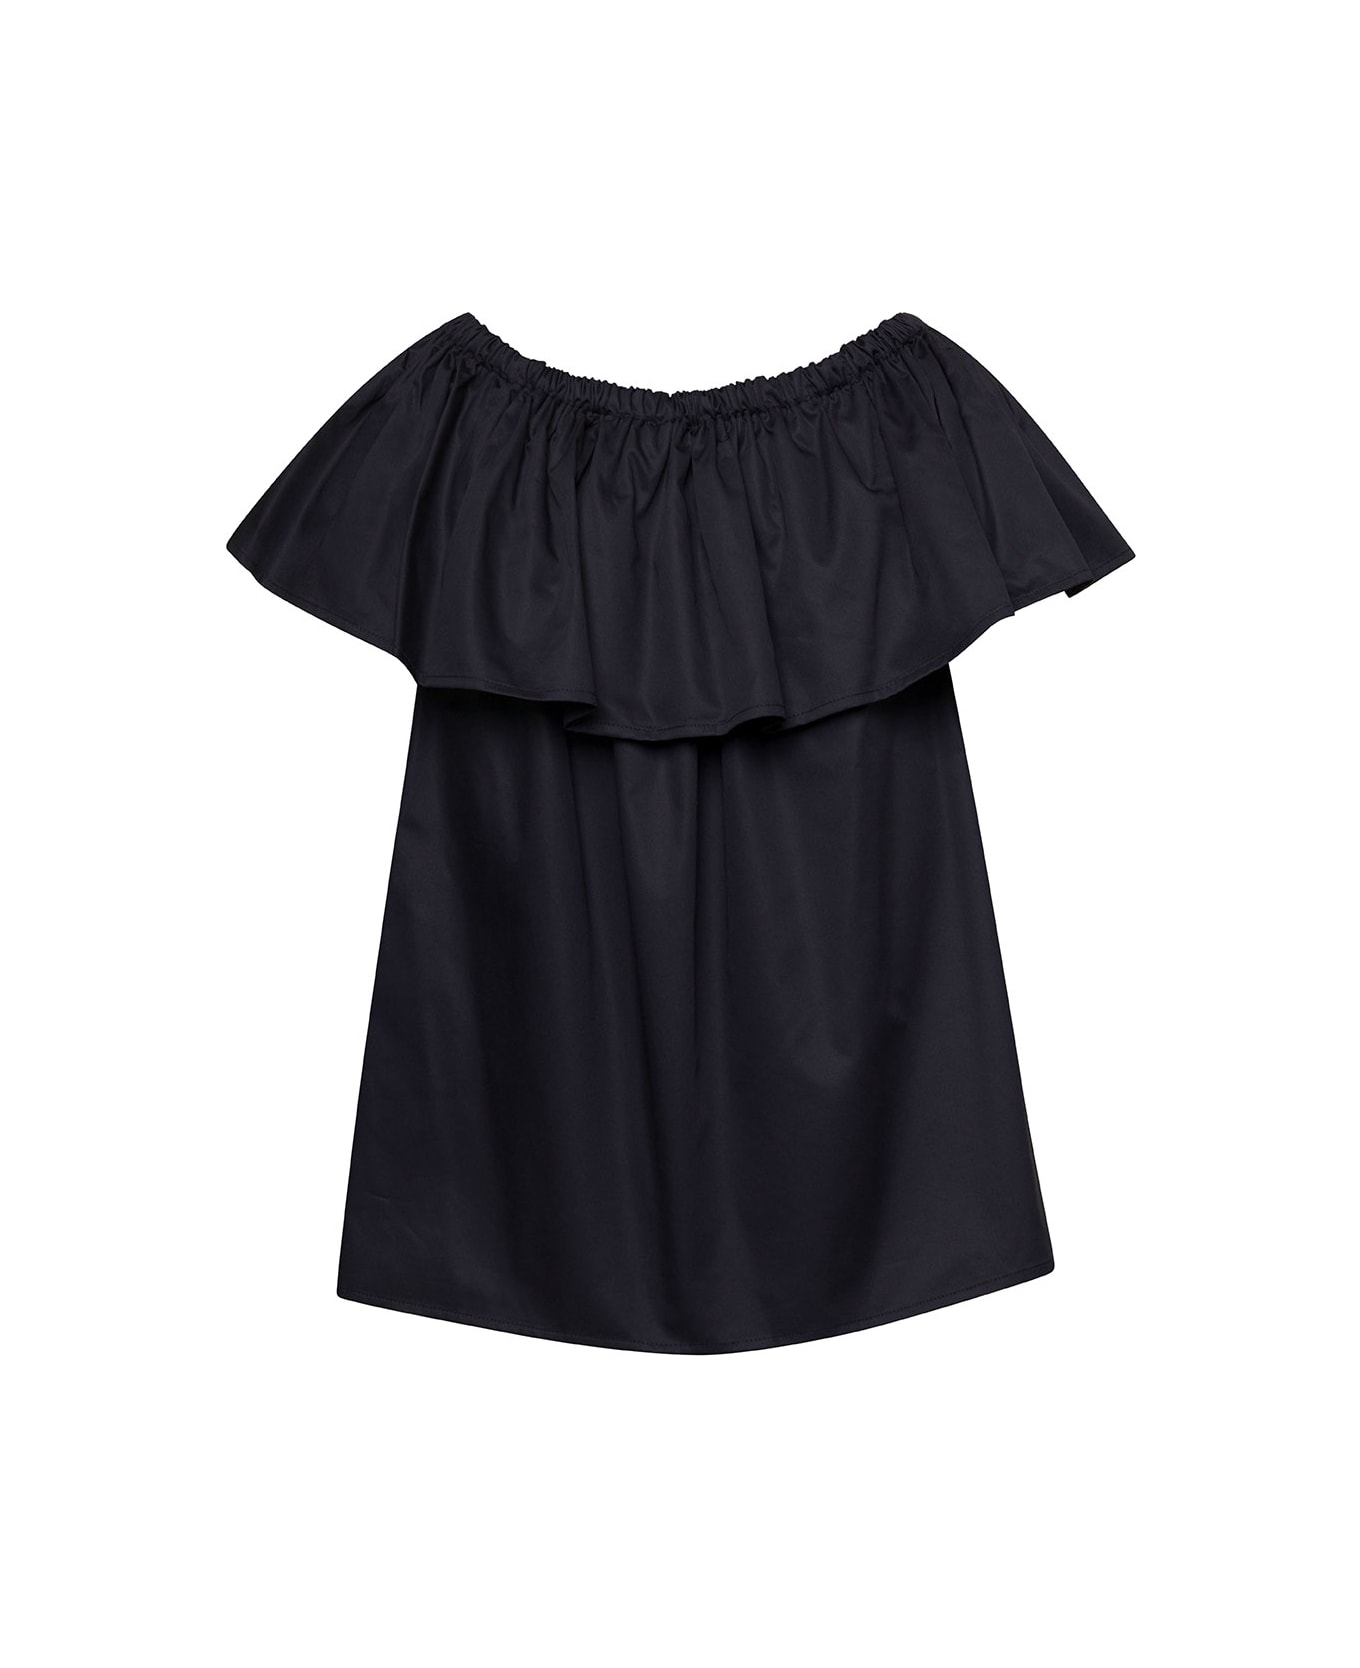 Douuod Black Sleeveless Ruffle Top In Cotton Woman - Black